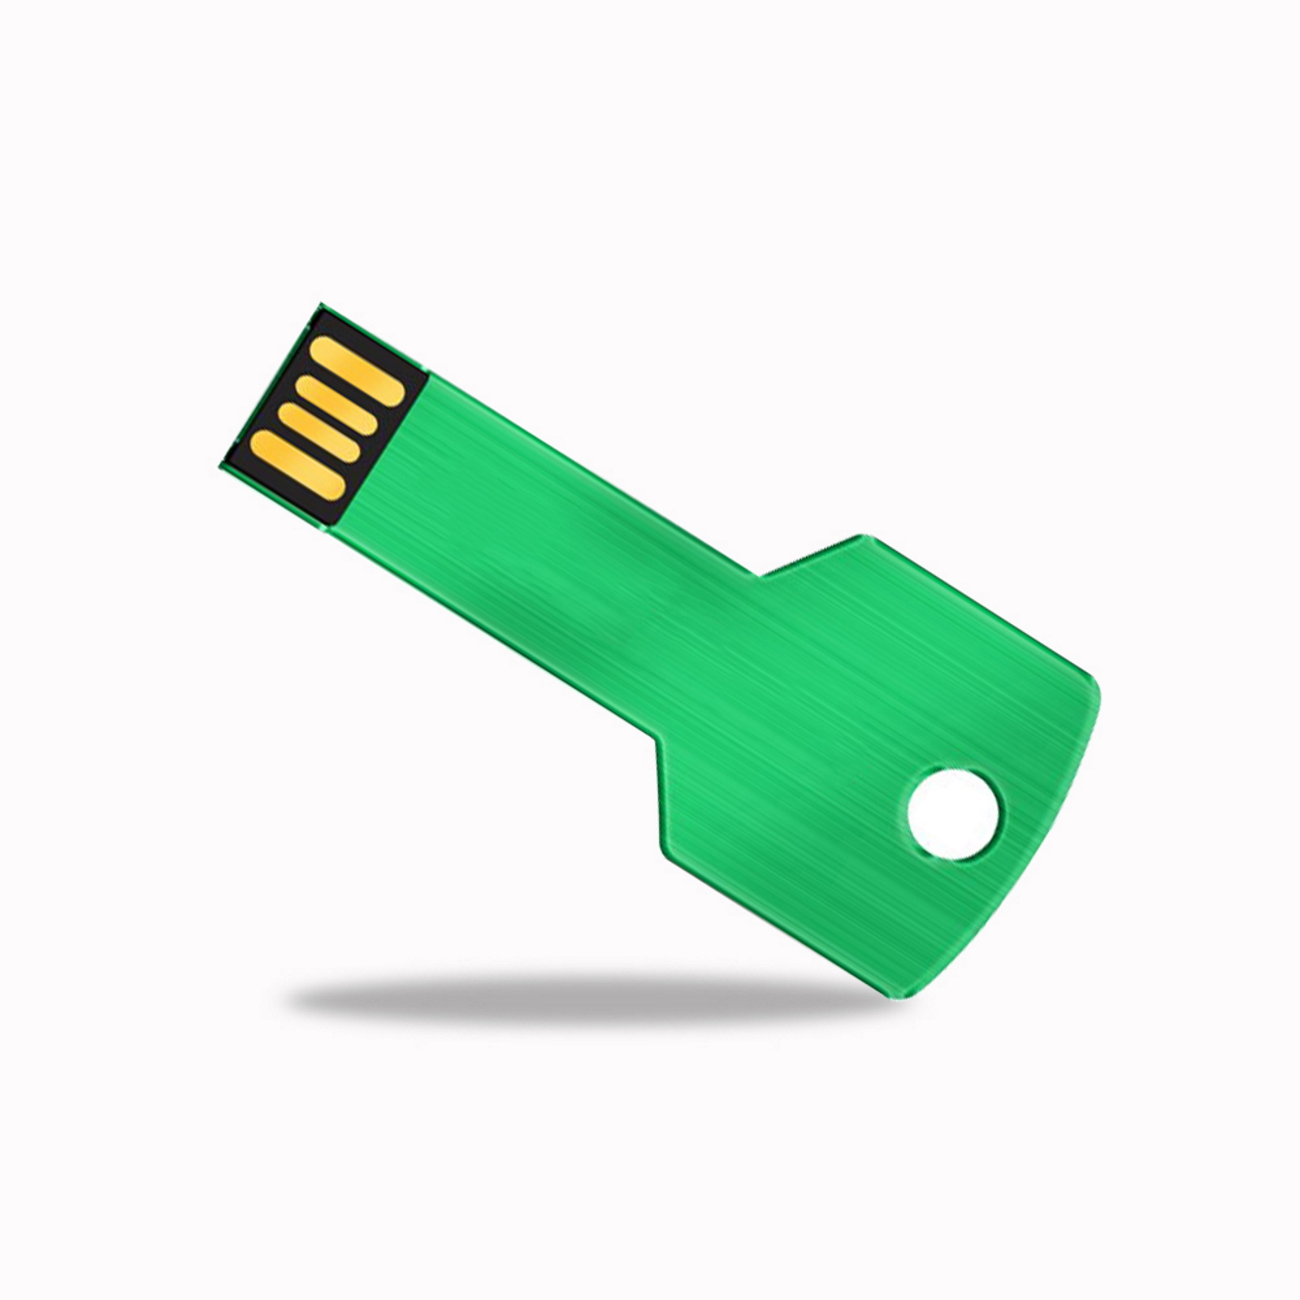 32 GERMANY Key Grün GB) USB-Stick (Grün, USB 32GB